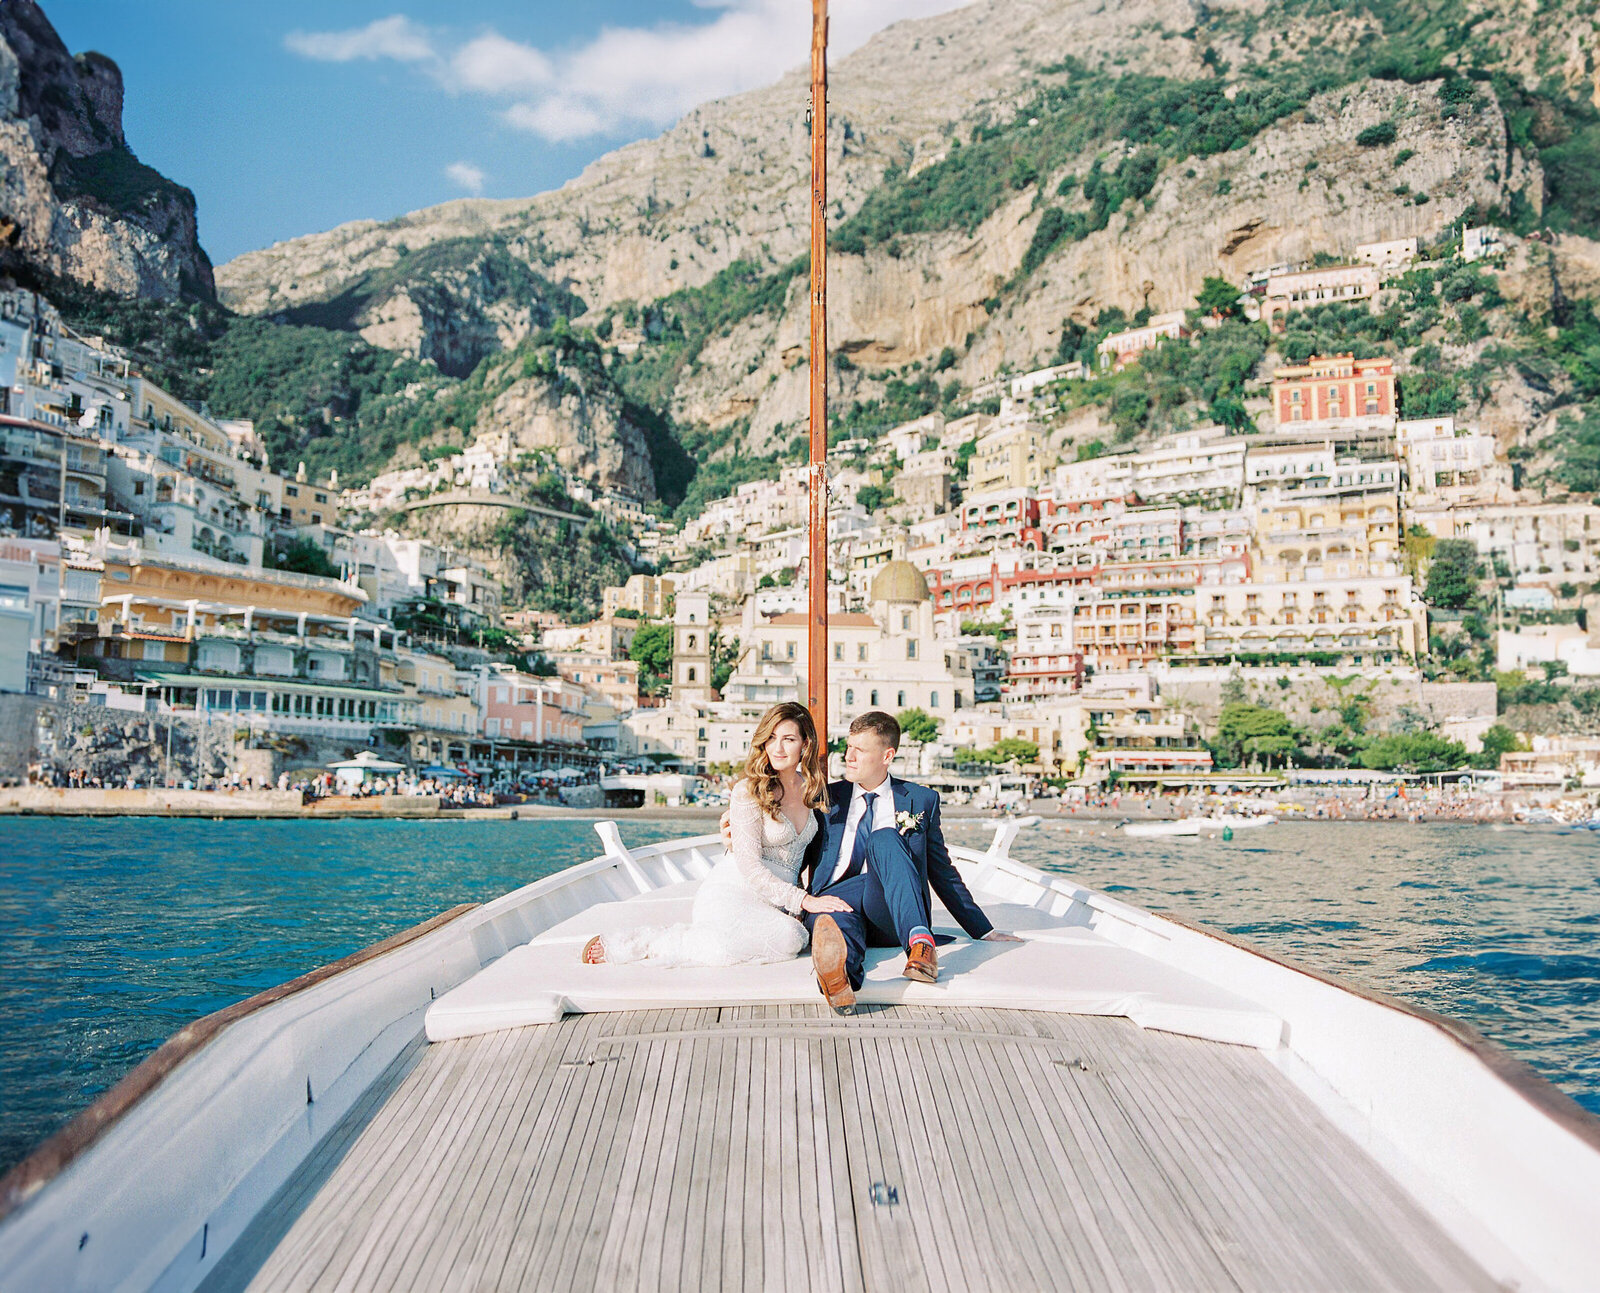 Bride and groom wedding day boat ride in Positano